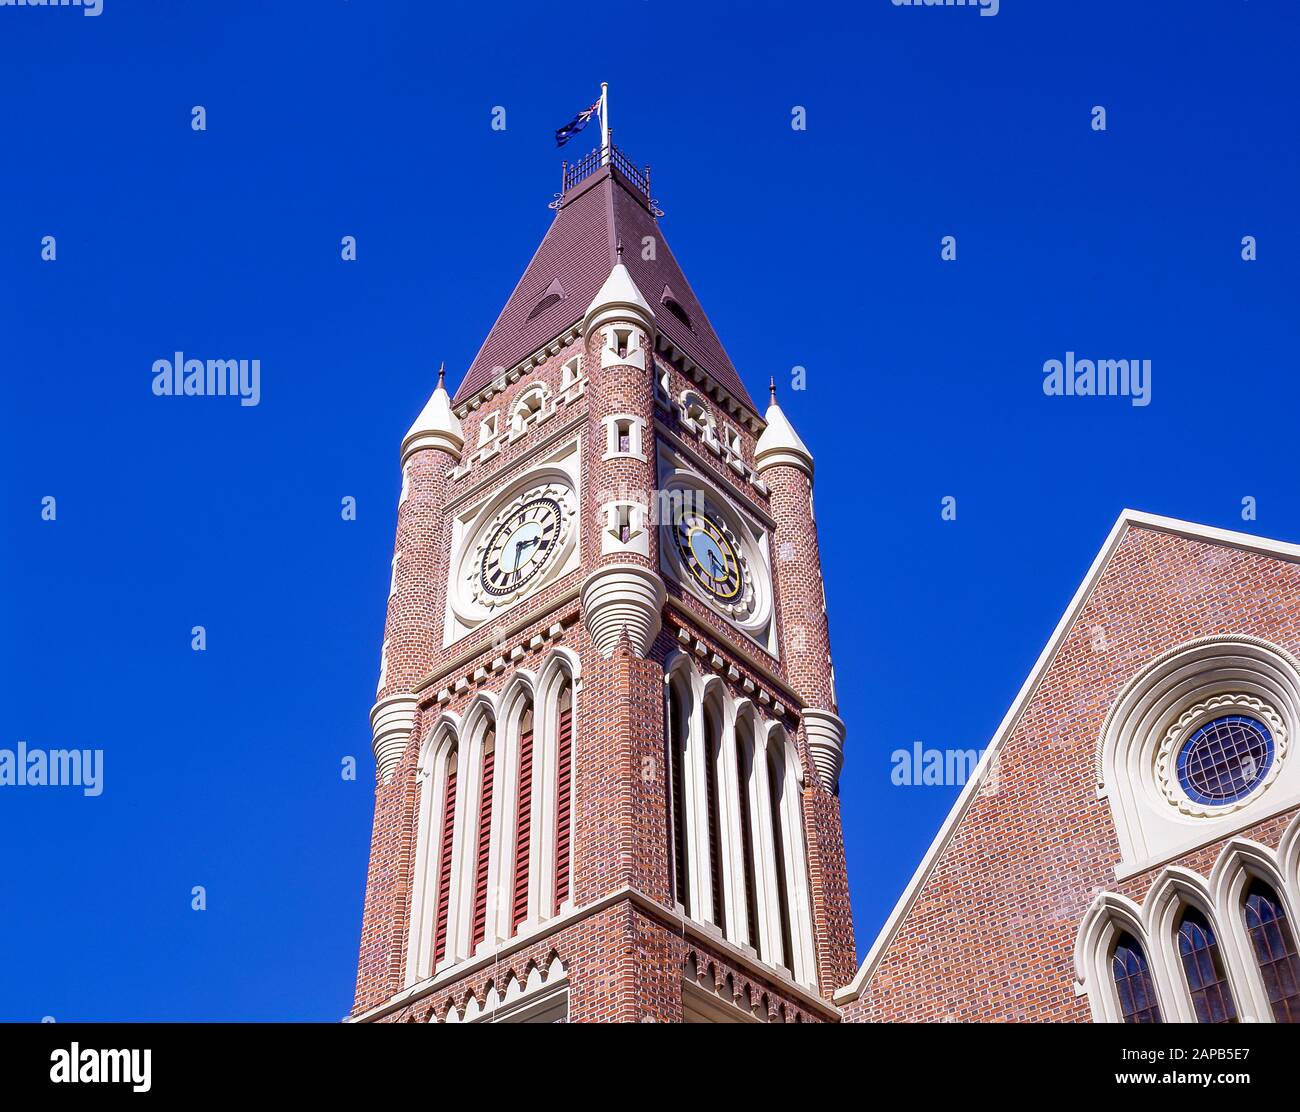 Clock tower on Perth Town Hall, Hay Street, Perth, Western Australia, Australia Stock Photo